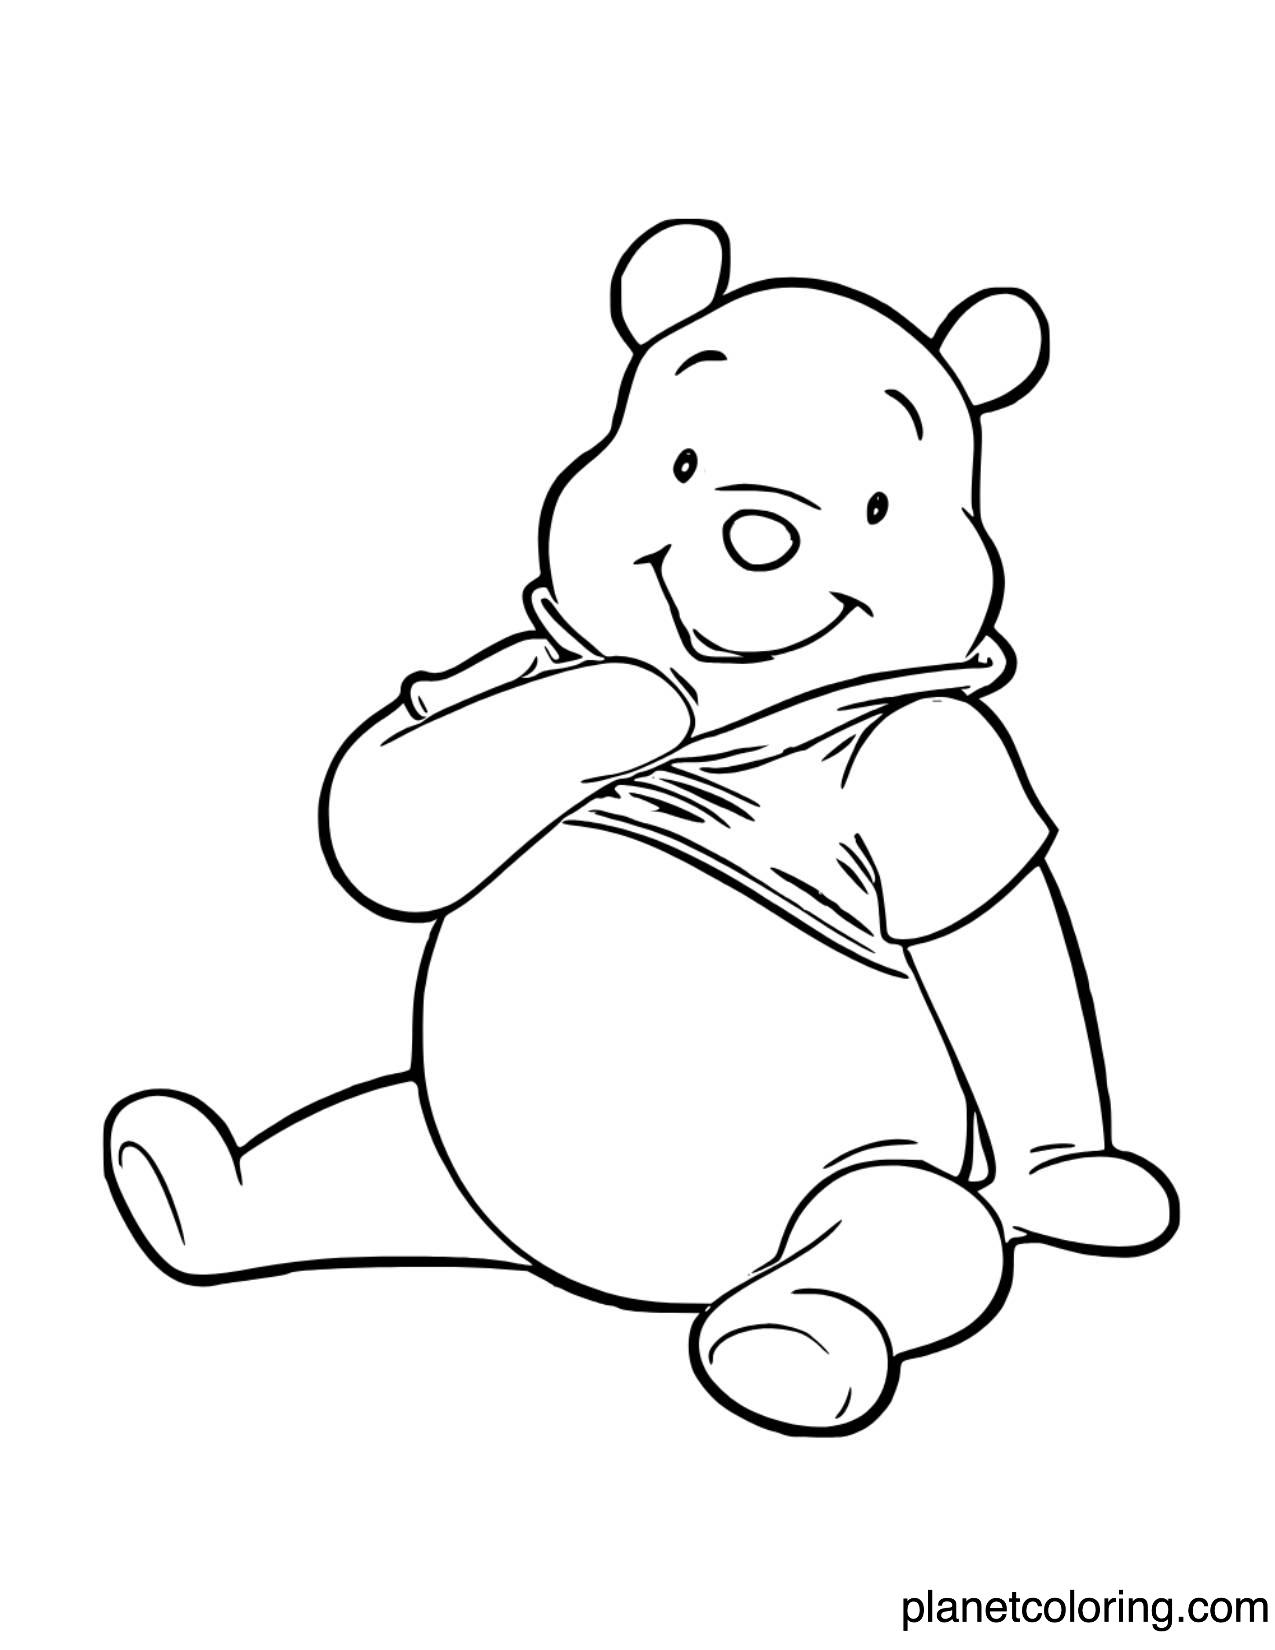 Pooh sitting